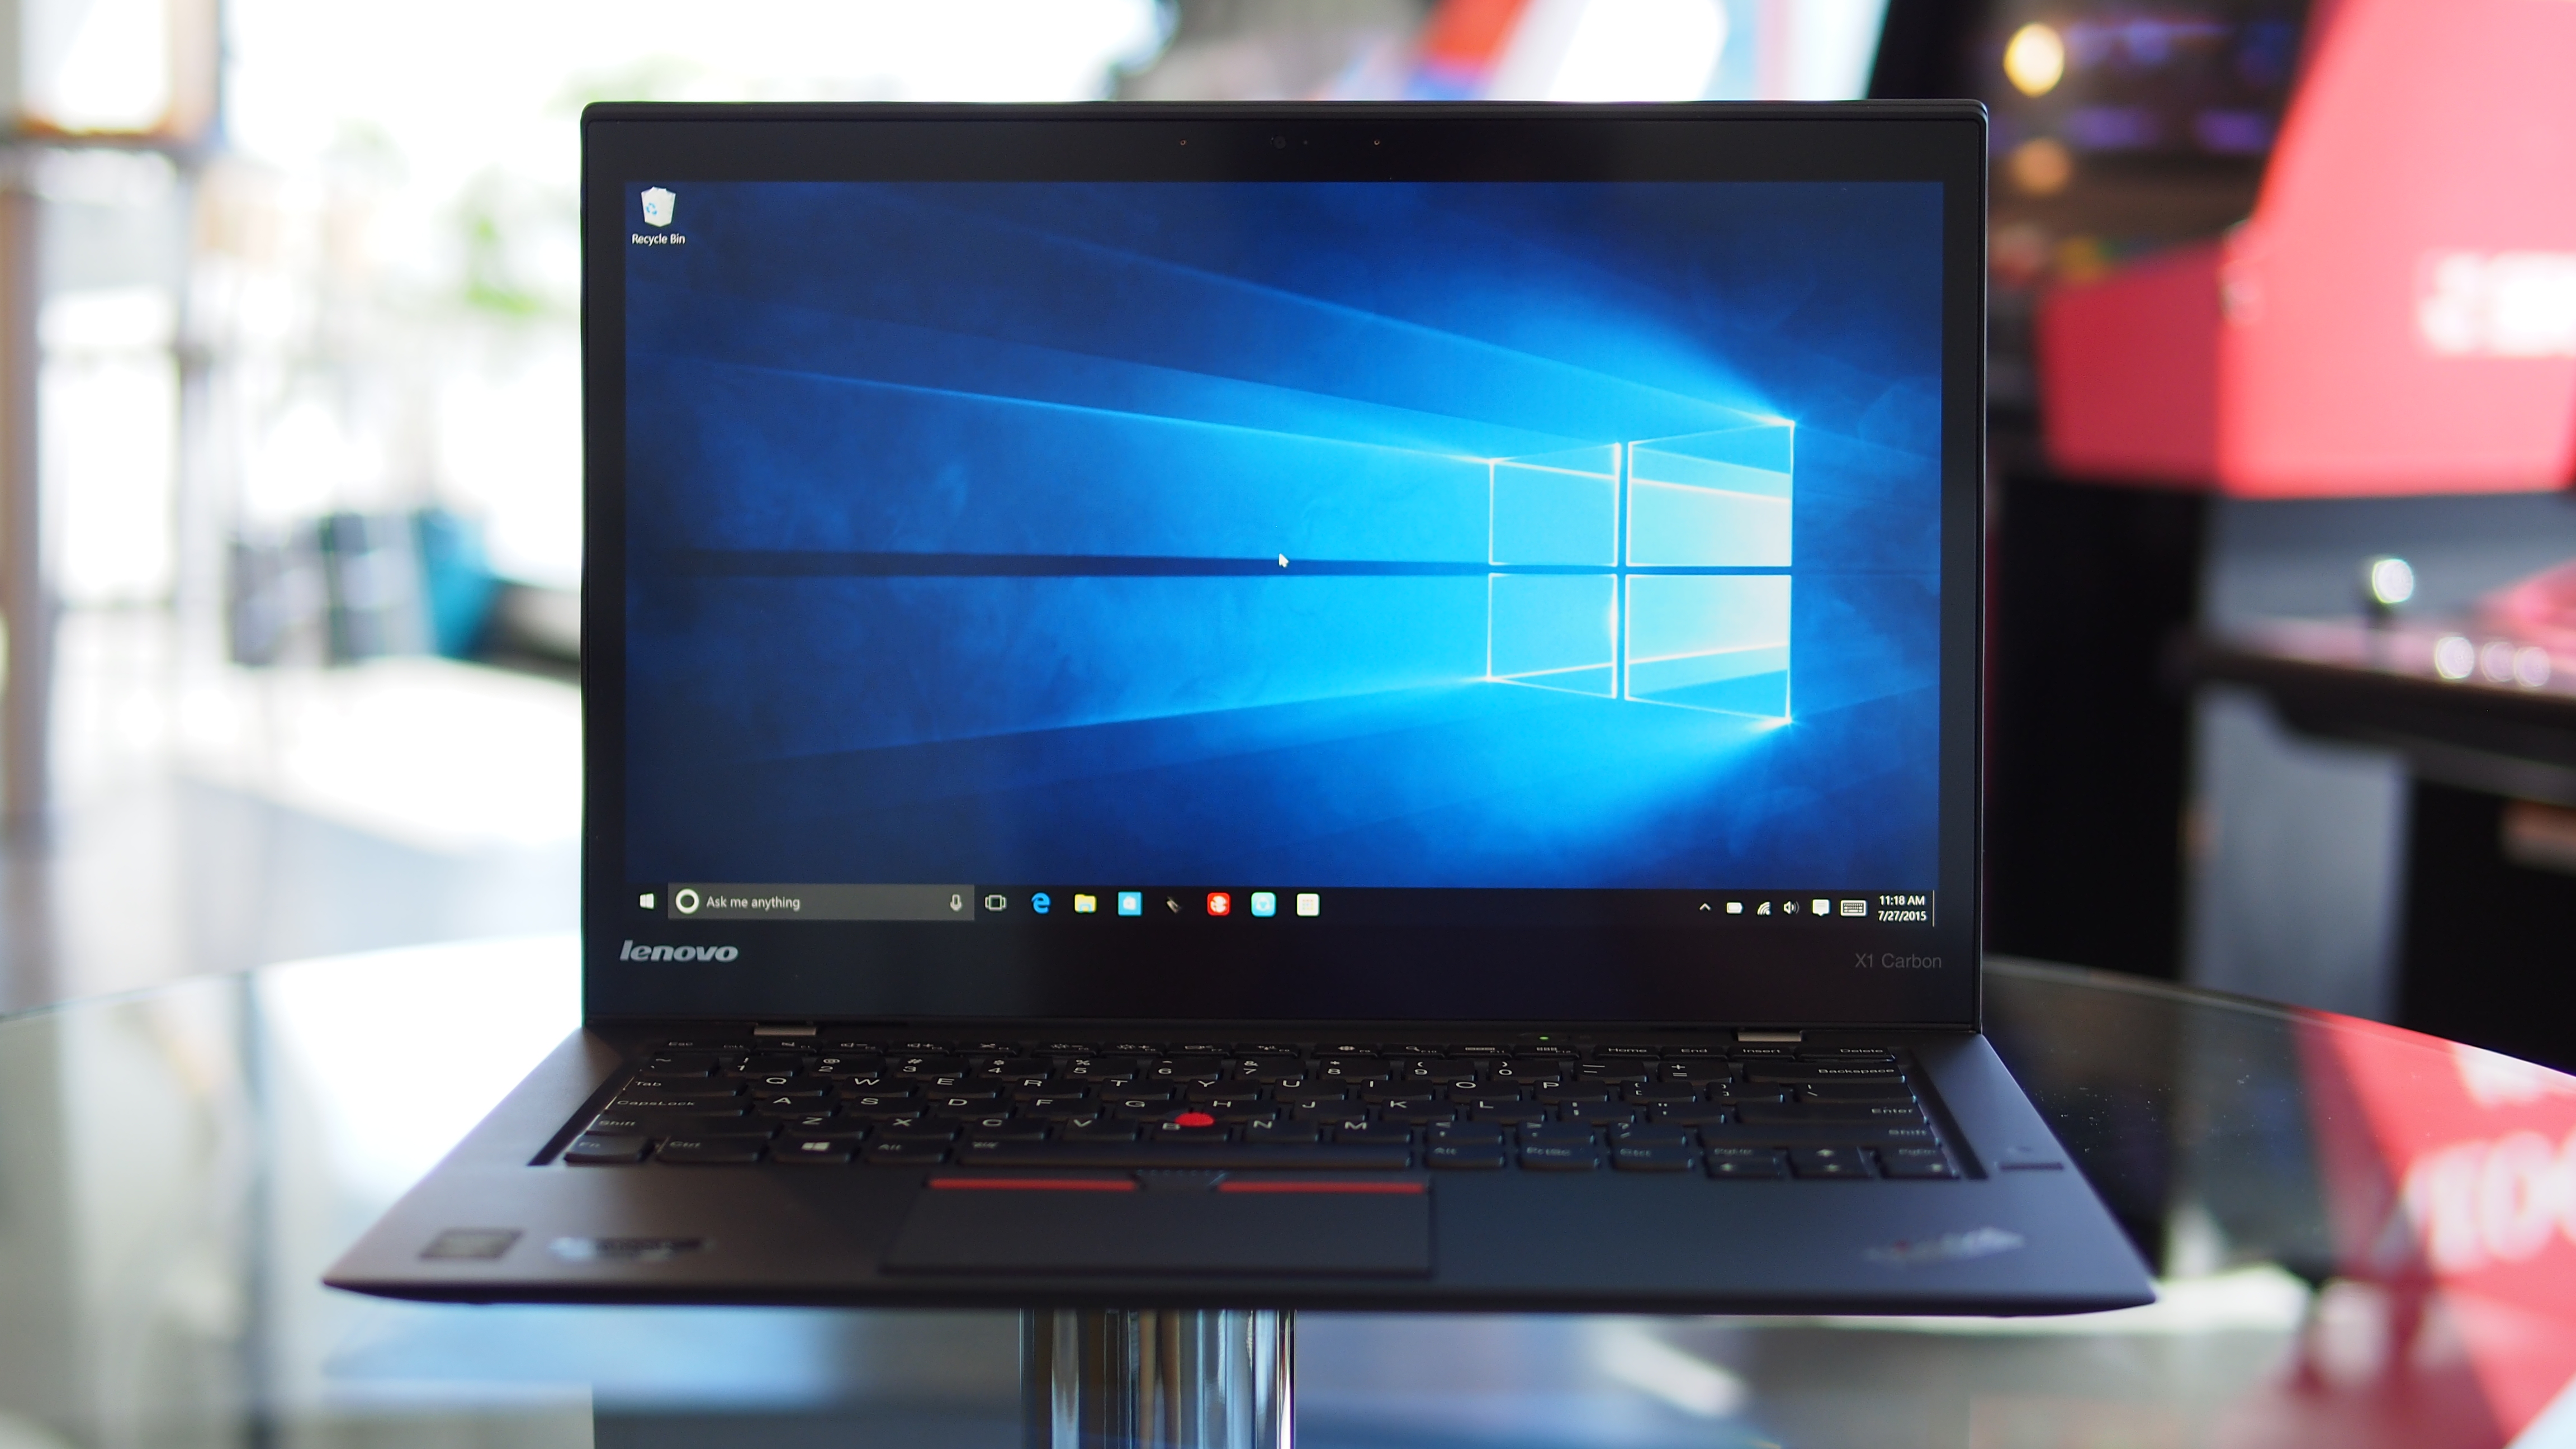 The Windows 10 desktop shown on a ThinkPad laptop.